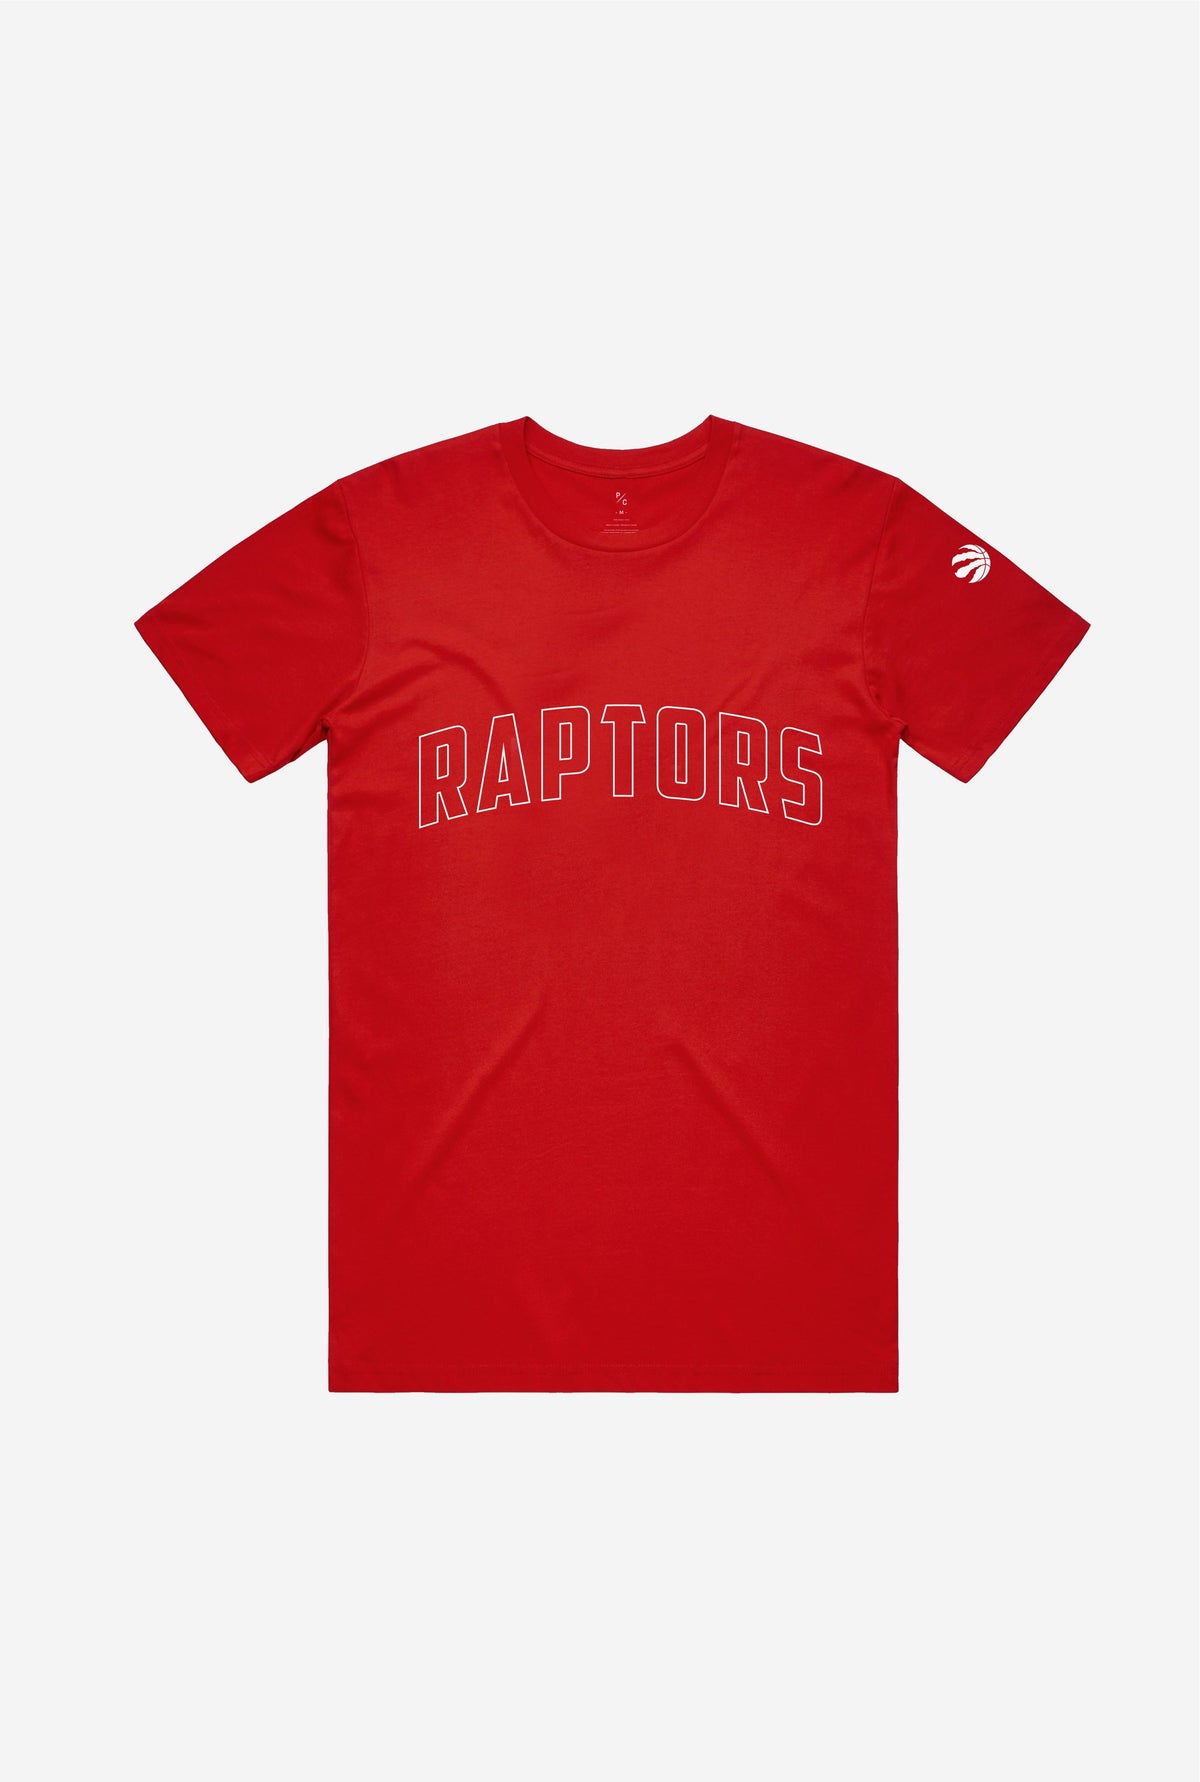 Toronto Raptors T-Shirt - Red